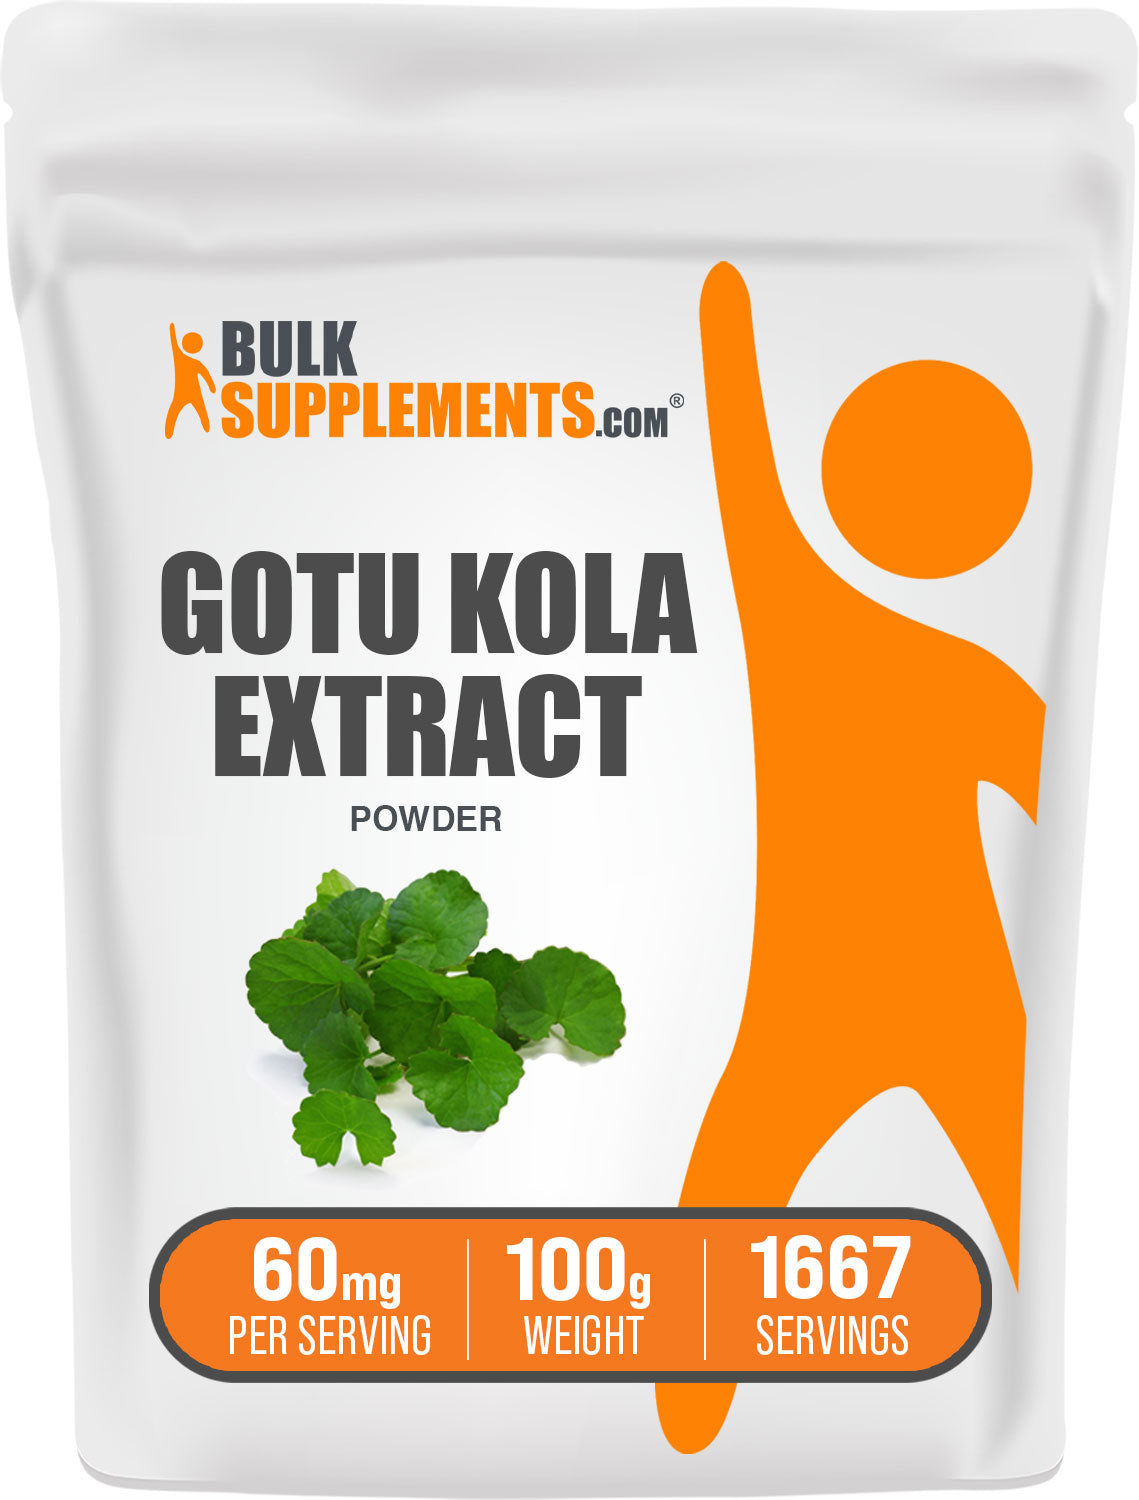 Gotu Kola Extract 100g